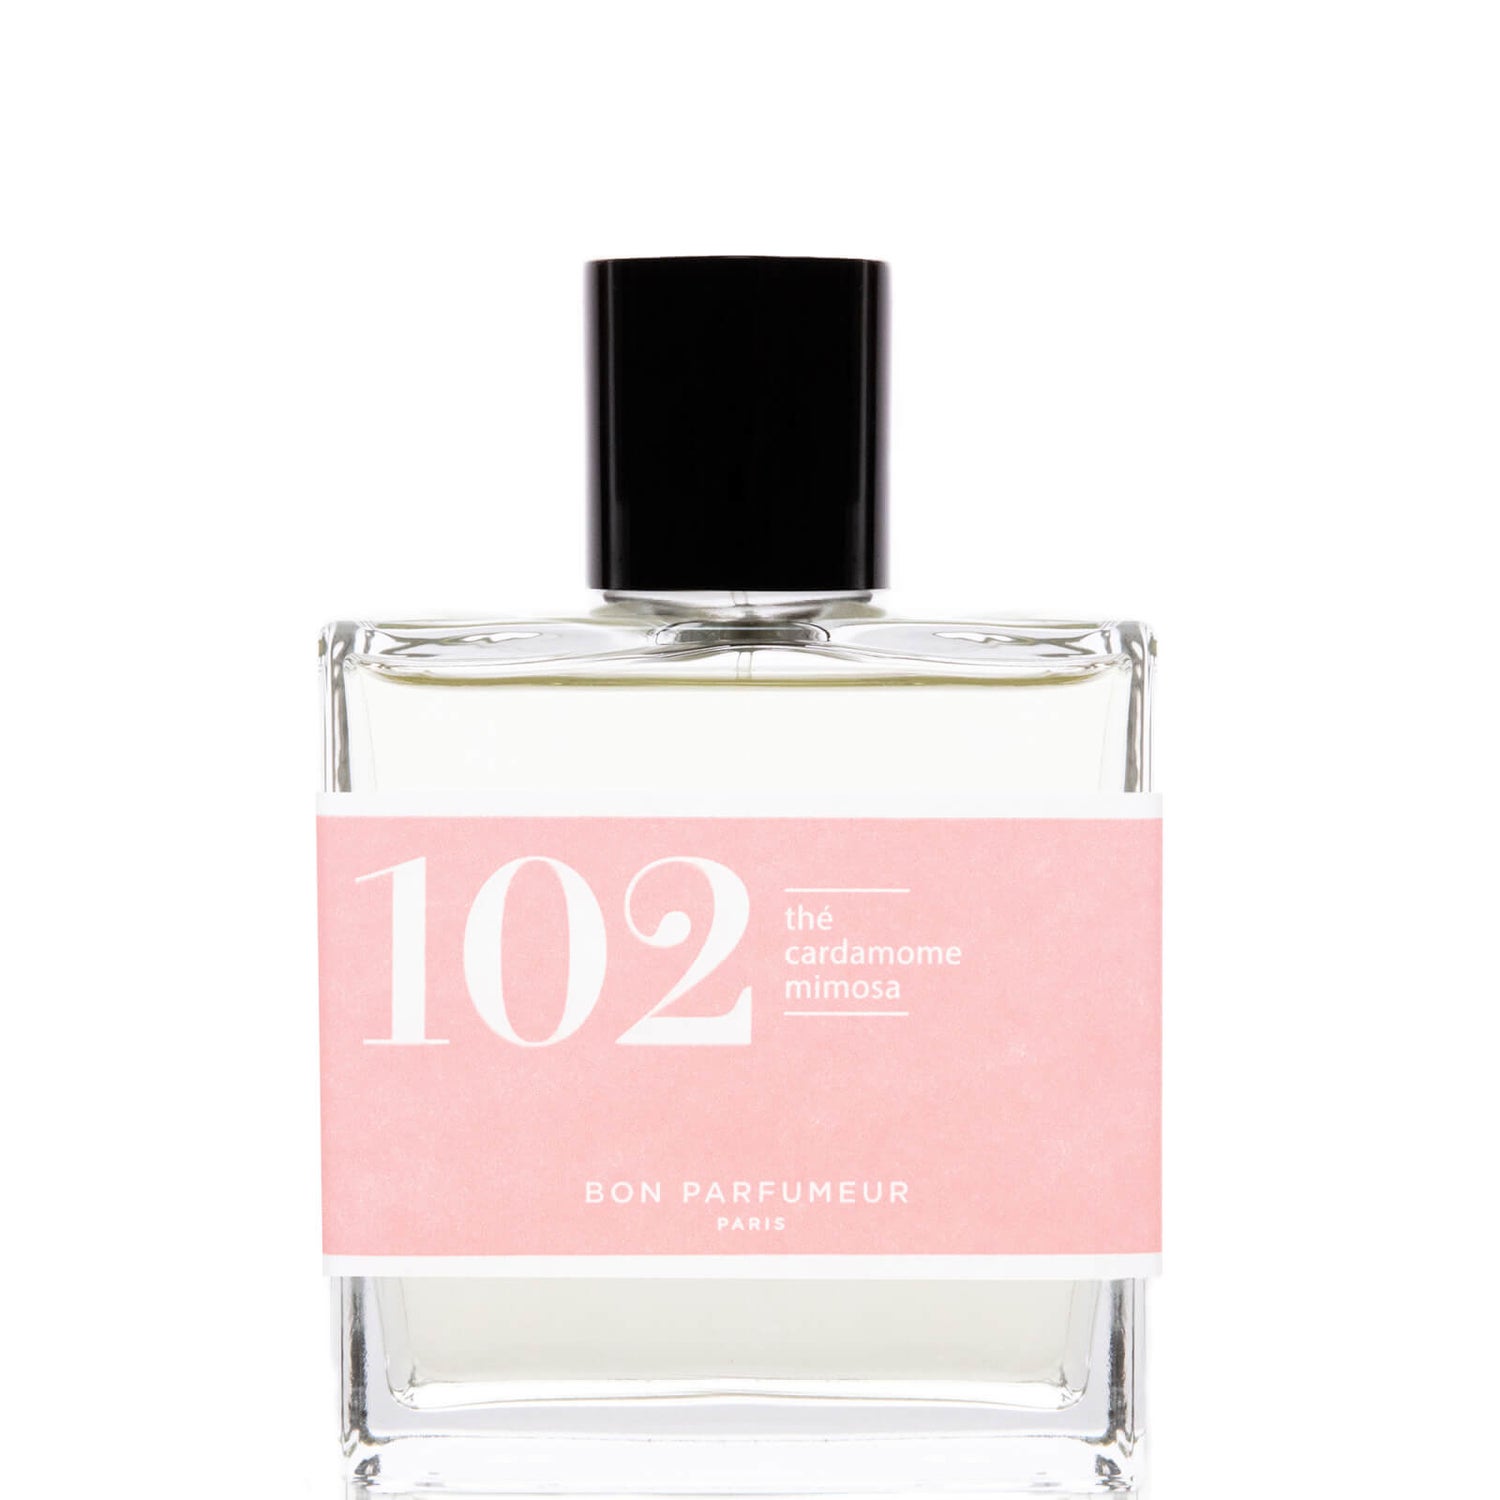 Bon Parfumeur 102 Tea Cardamom Mimosa Eau de Parfum - 100 ml